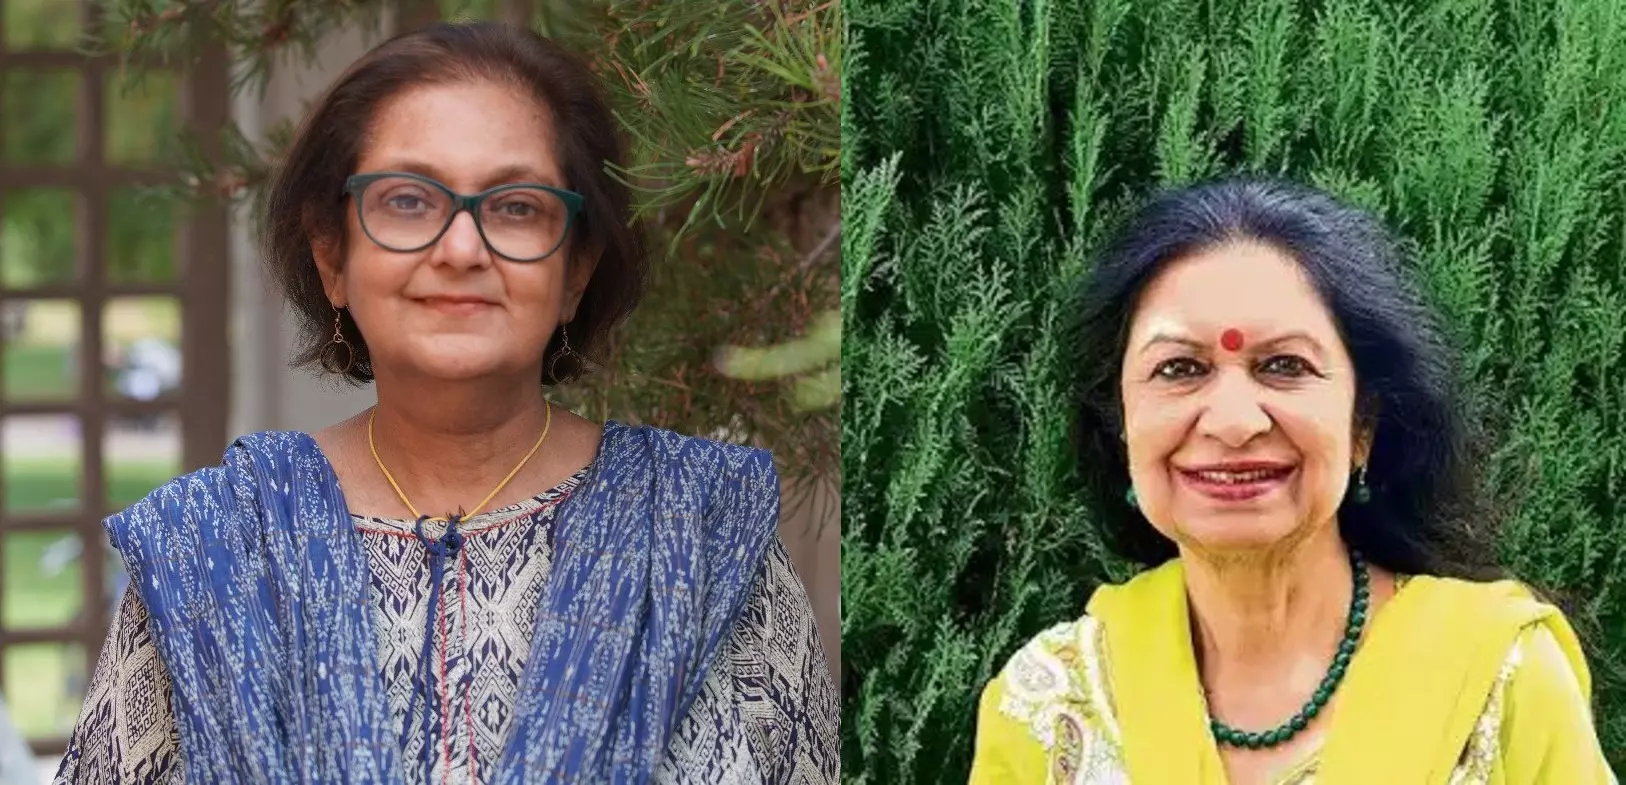 Interview | Lakshmi, Radha, Sita a triptych on the sacred feminine: Namita Gokhale